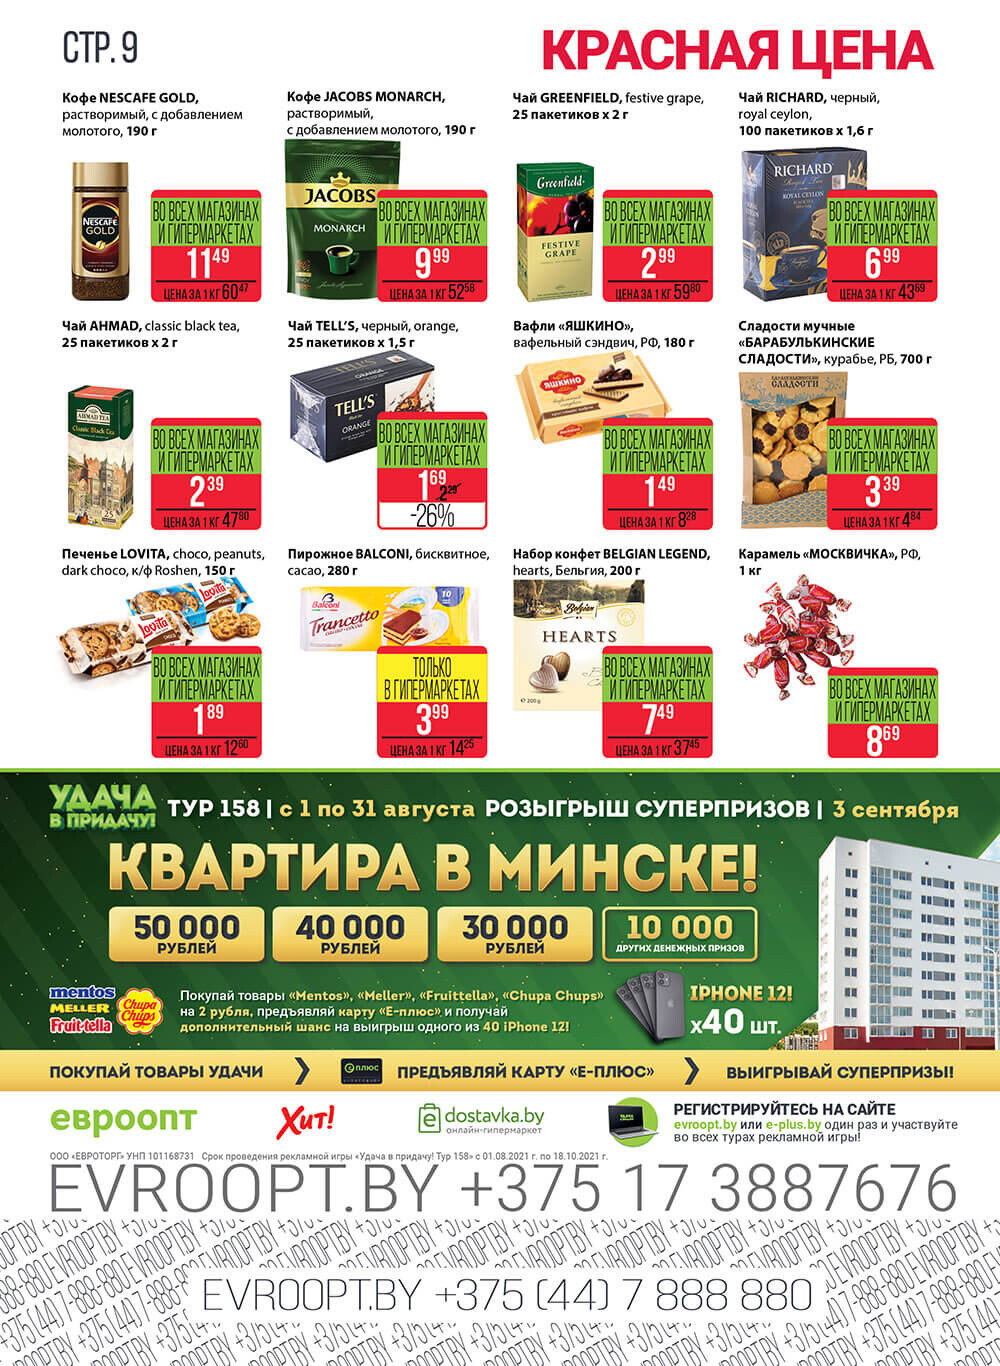 Каталог (листовка) акции "Красная цена" Евроопт с 9 по 22 августа 2021 года